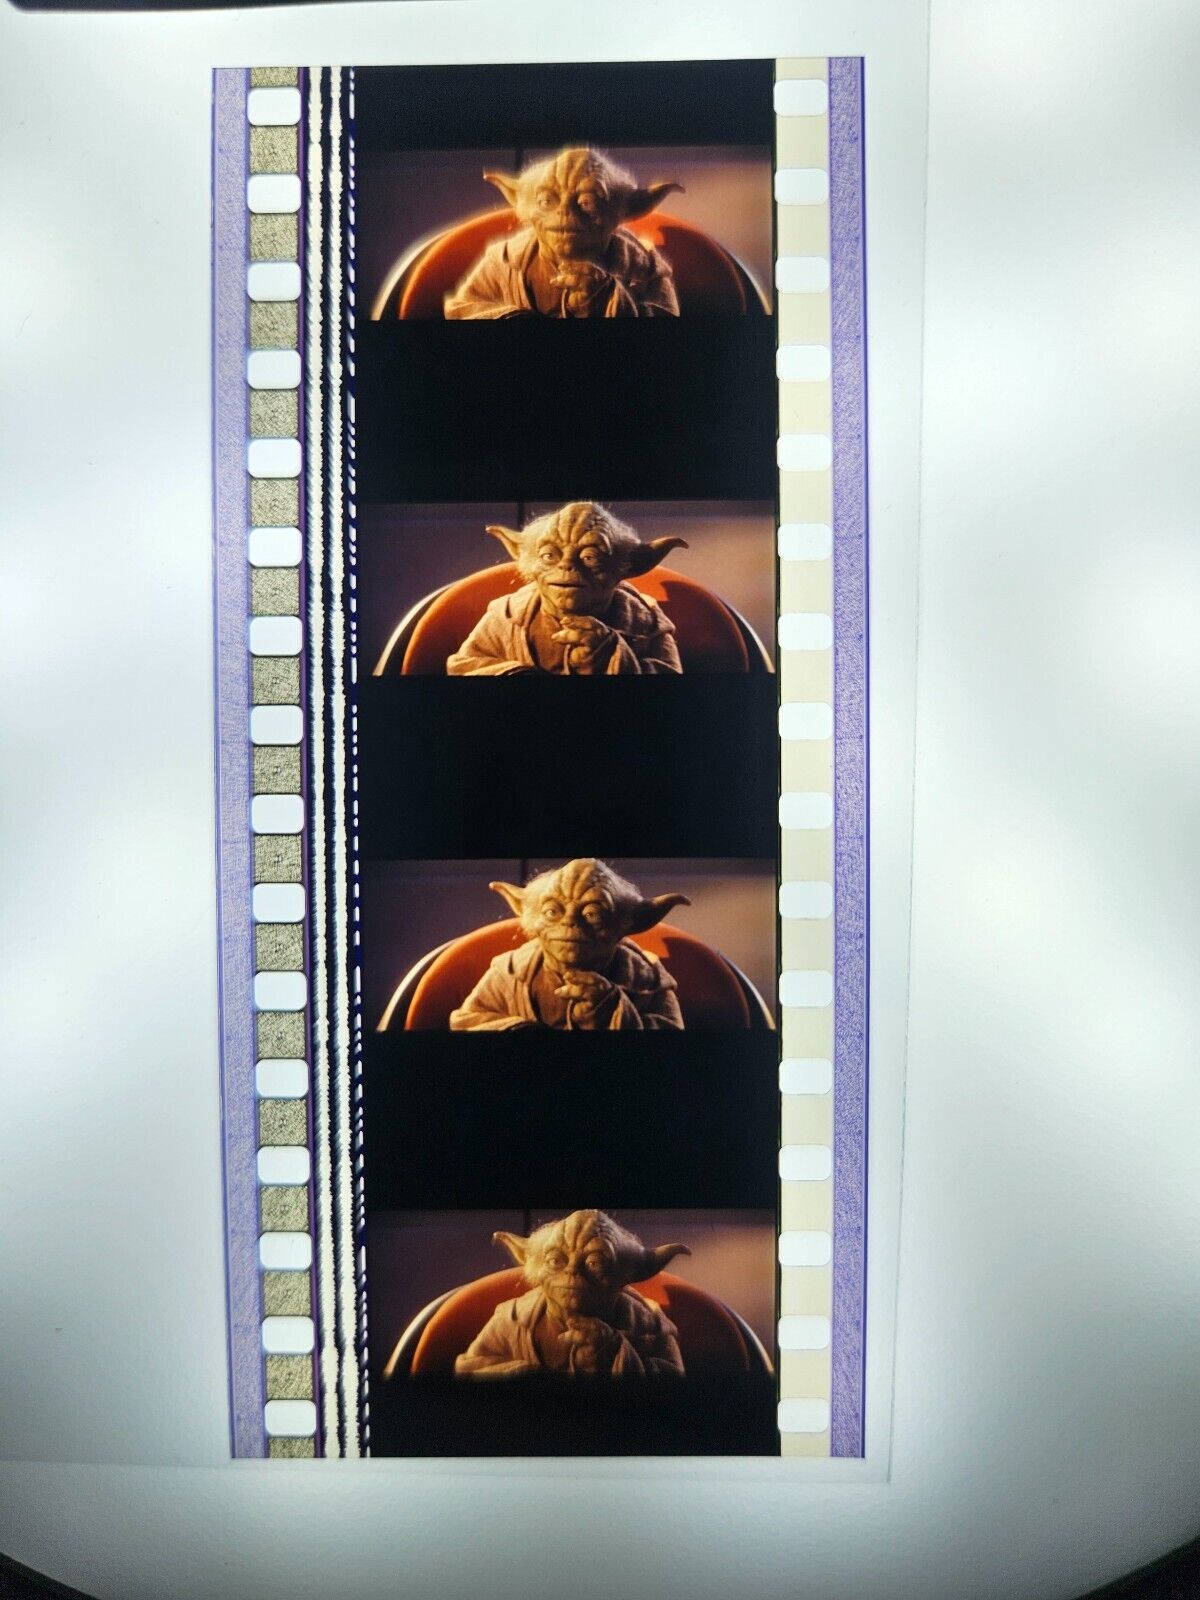 Yoda Star Wars Episode 1 Phantom Menace 35mm Original Film Cells SW2078 Star Wars 35mm Film Cell - Hobby Gems